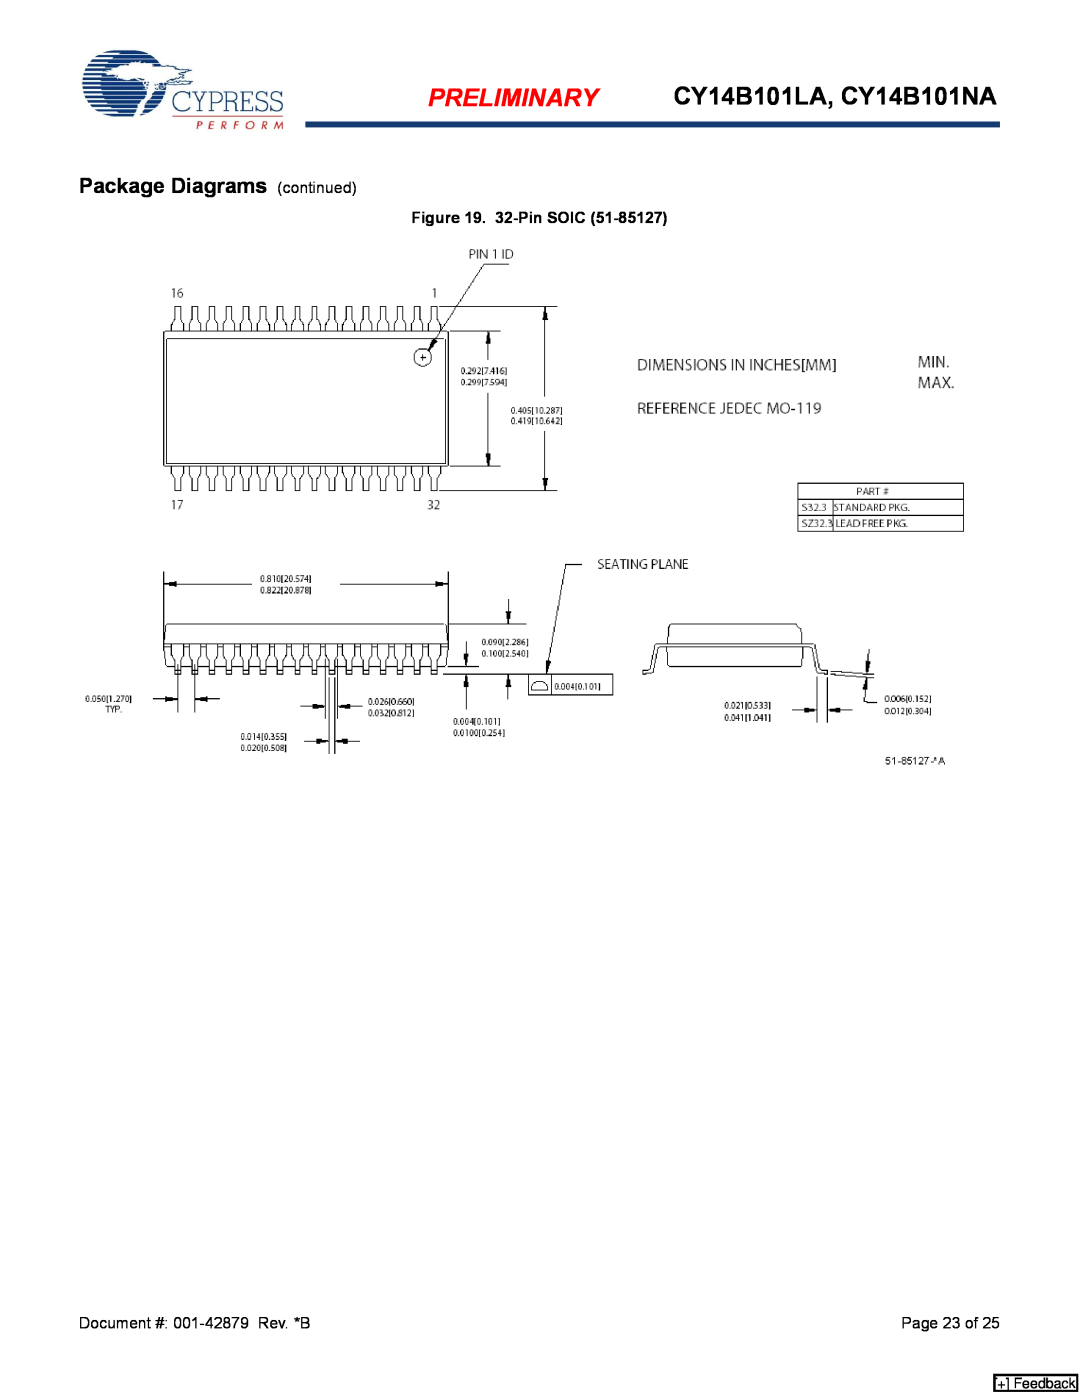 Cypress manual PRELIMINARY CY14B101LA, CY14B101NA, Package Diagrams continued, 32-Pin SOIC, Page 23 of, + Feedback 